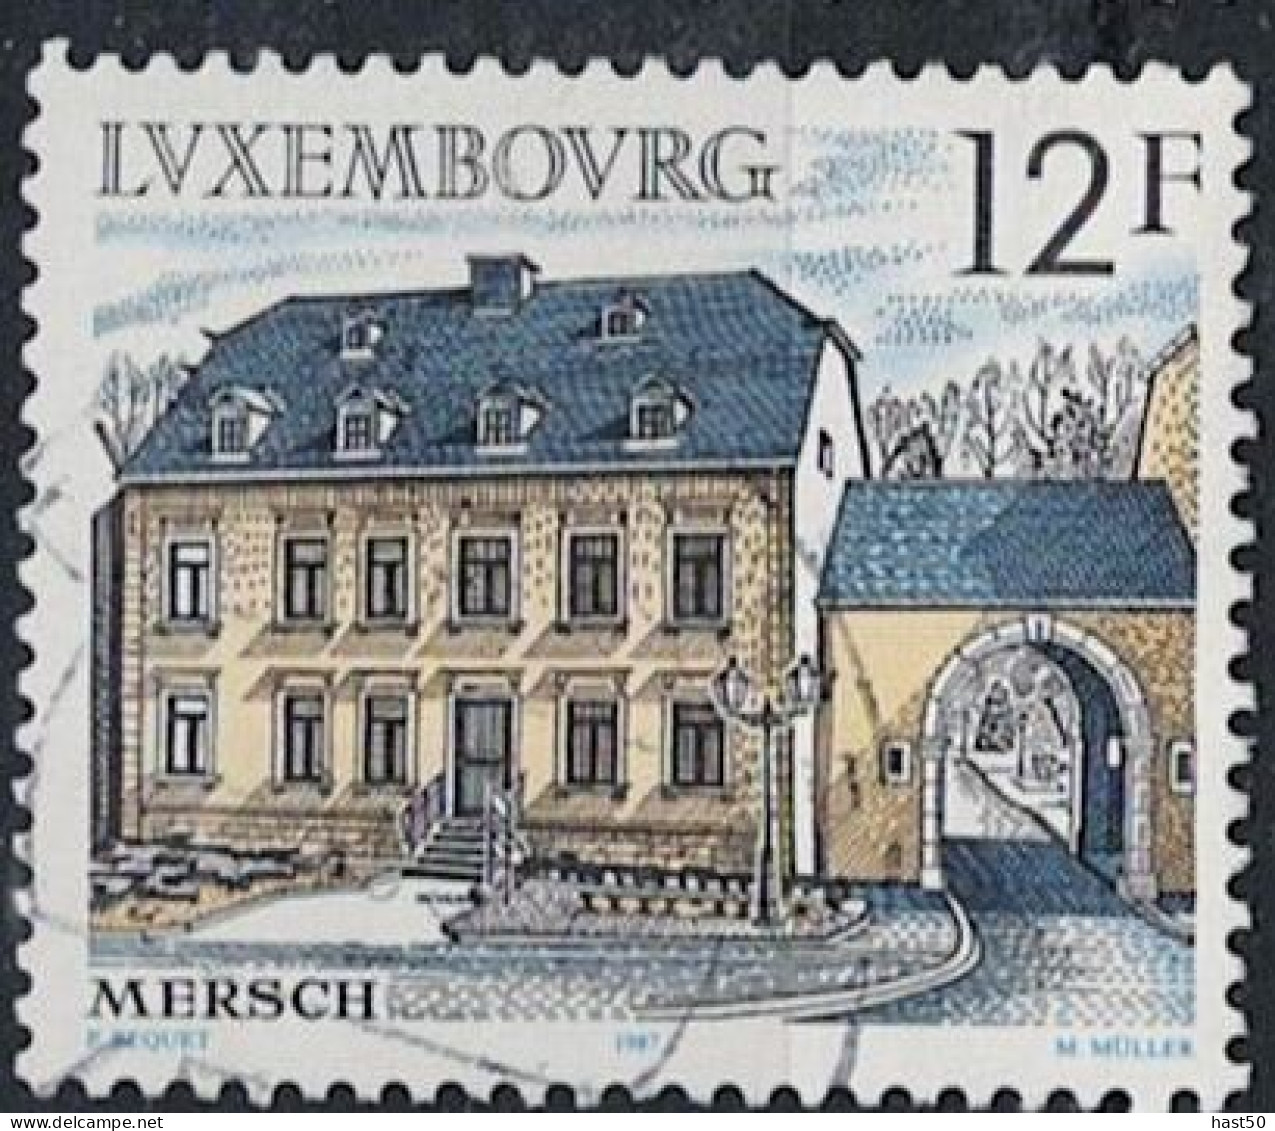 Luxemburg - Bürgerhaus, Mersch (MiNr: 1181) 1987 - Gest Used Obl - Used Stamps